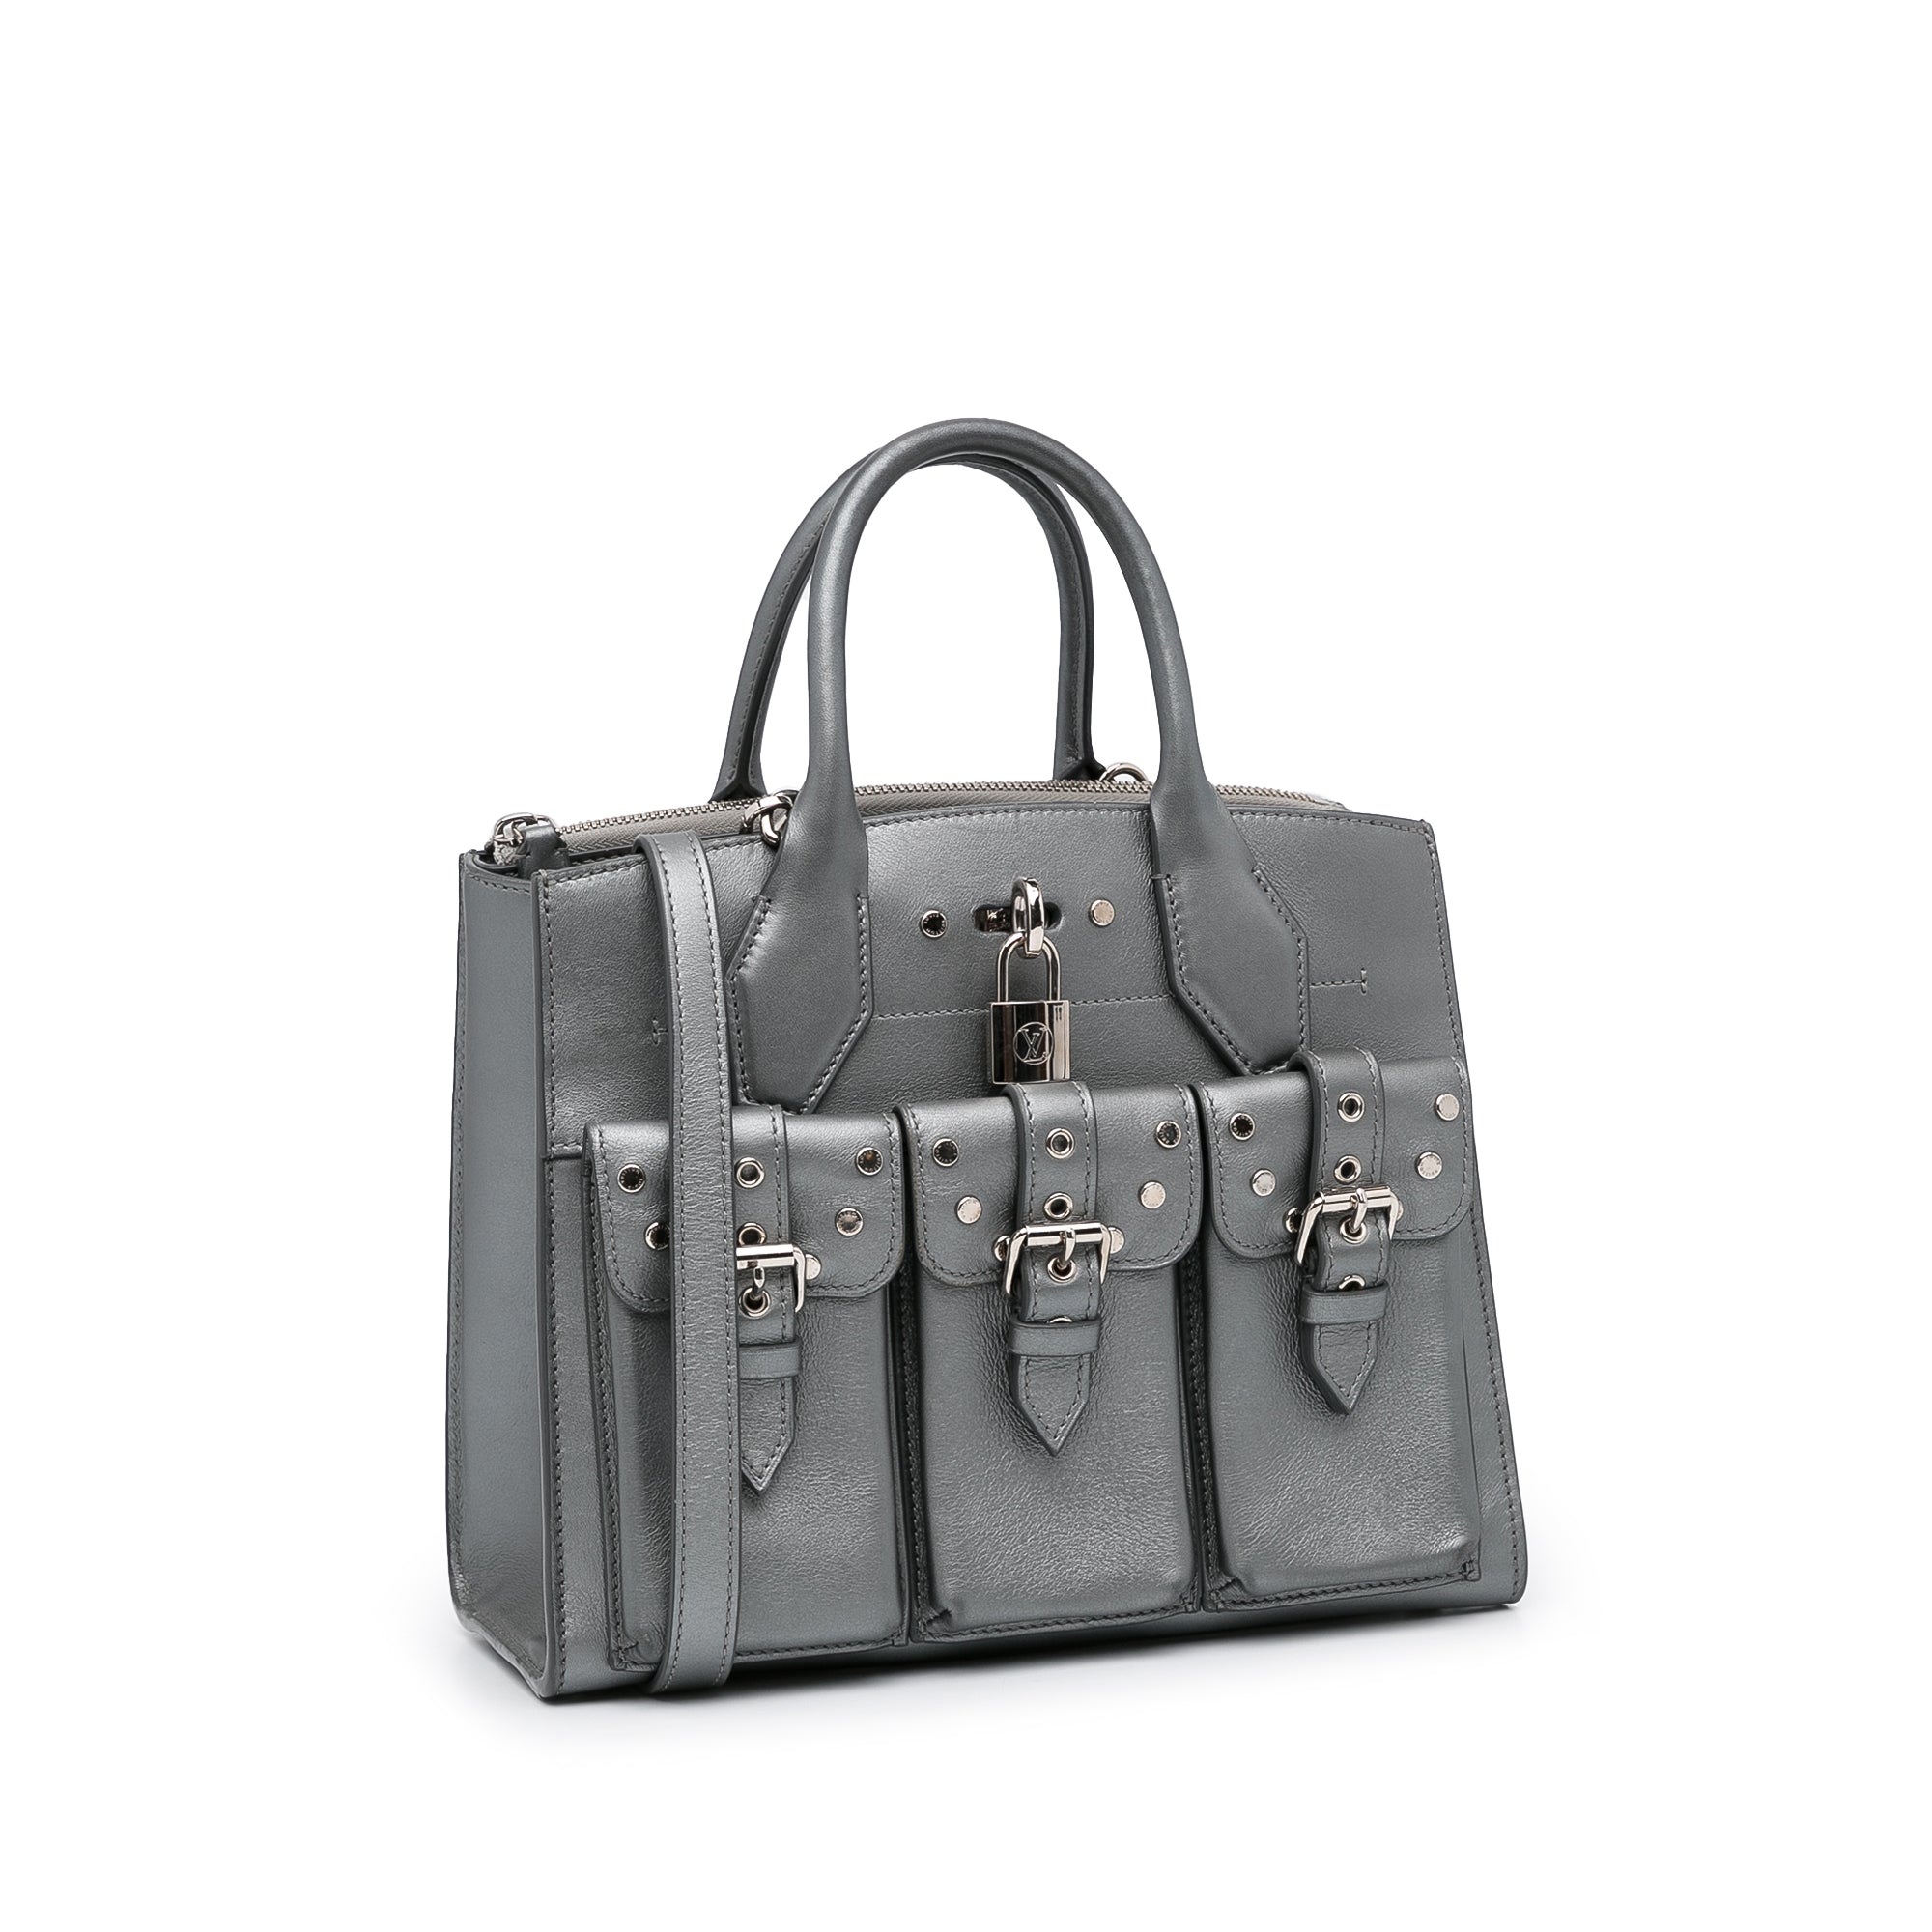 Louis Vuitton's drops latest City Steamer Tote bag